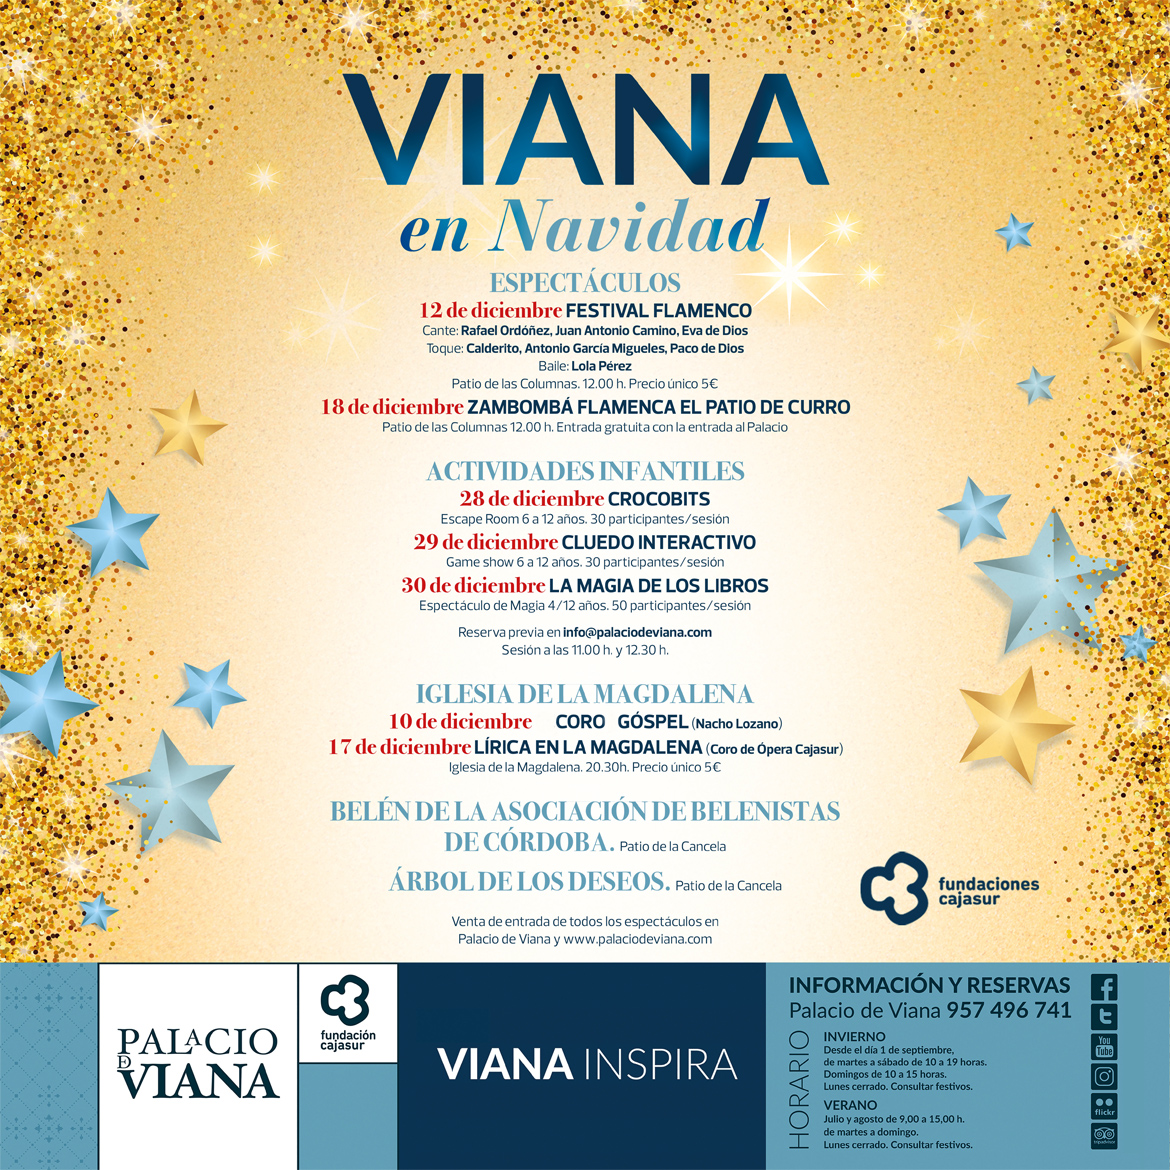 Viana at Christmas (Cordoba - Spain)